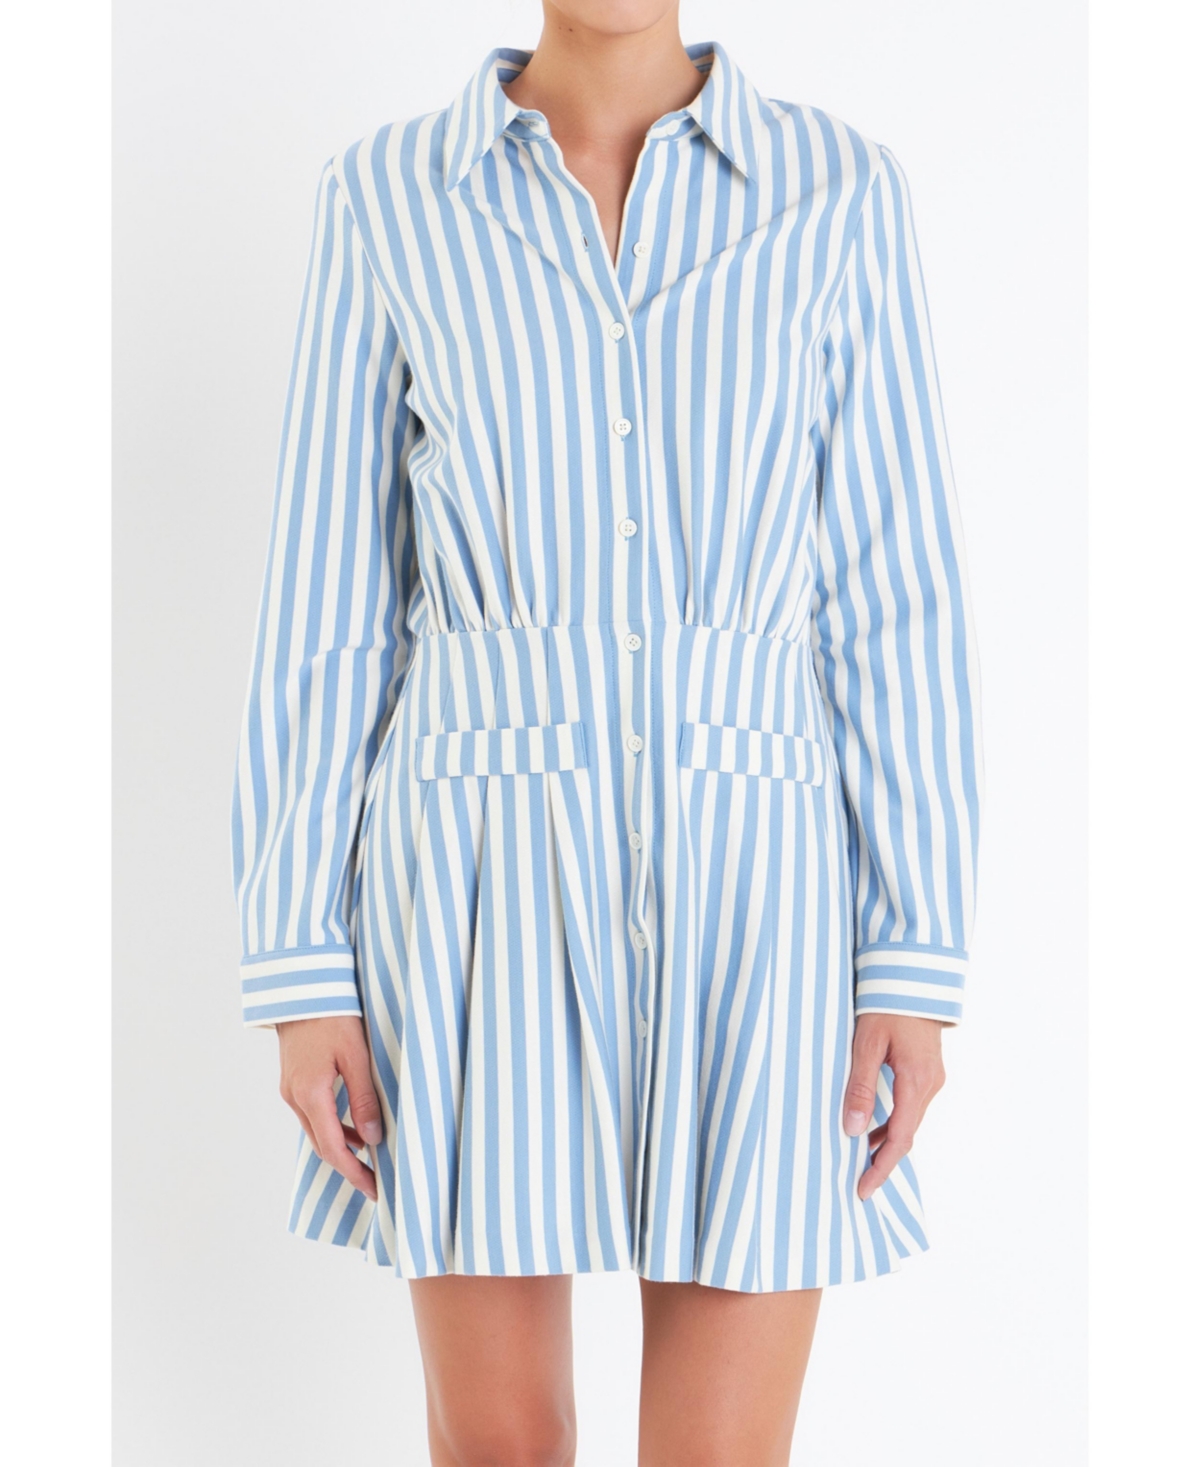 Women's Stripe Collar Mini Dress - Blue/white